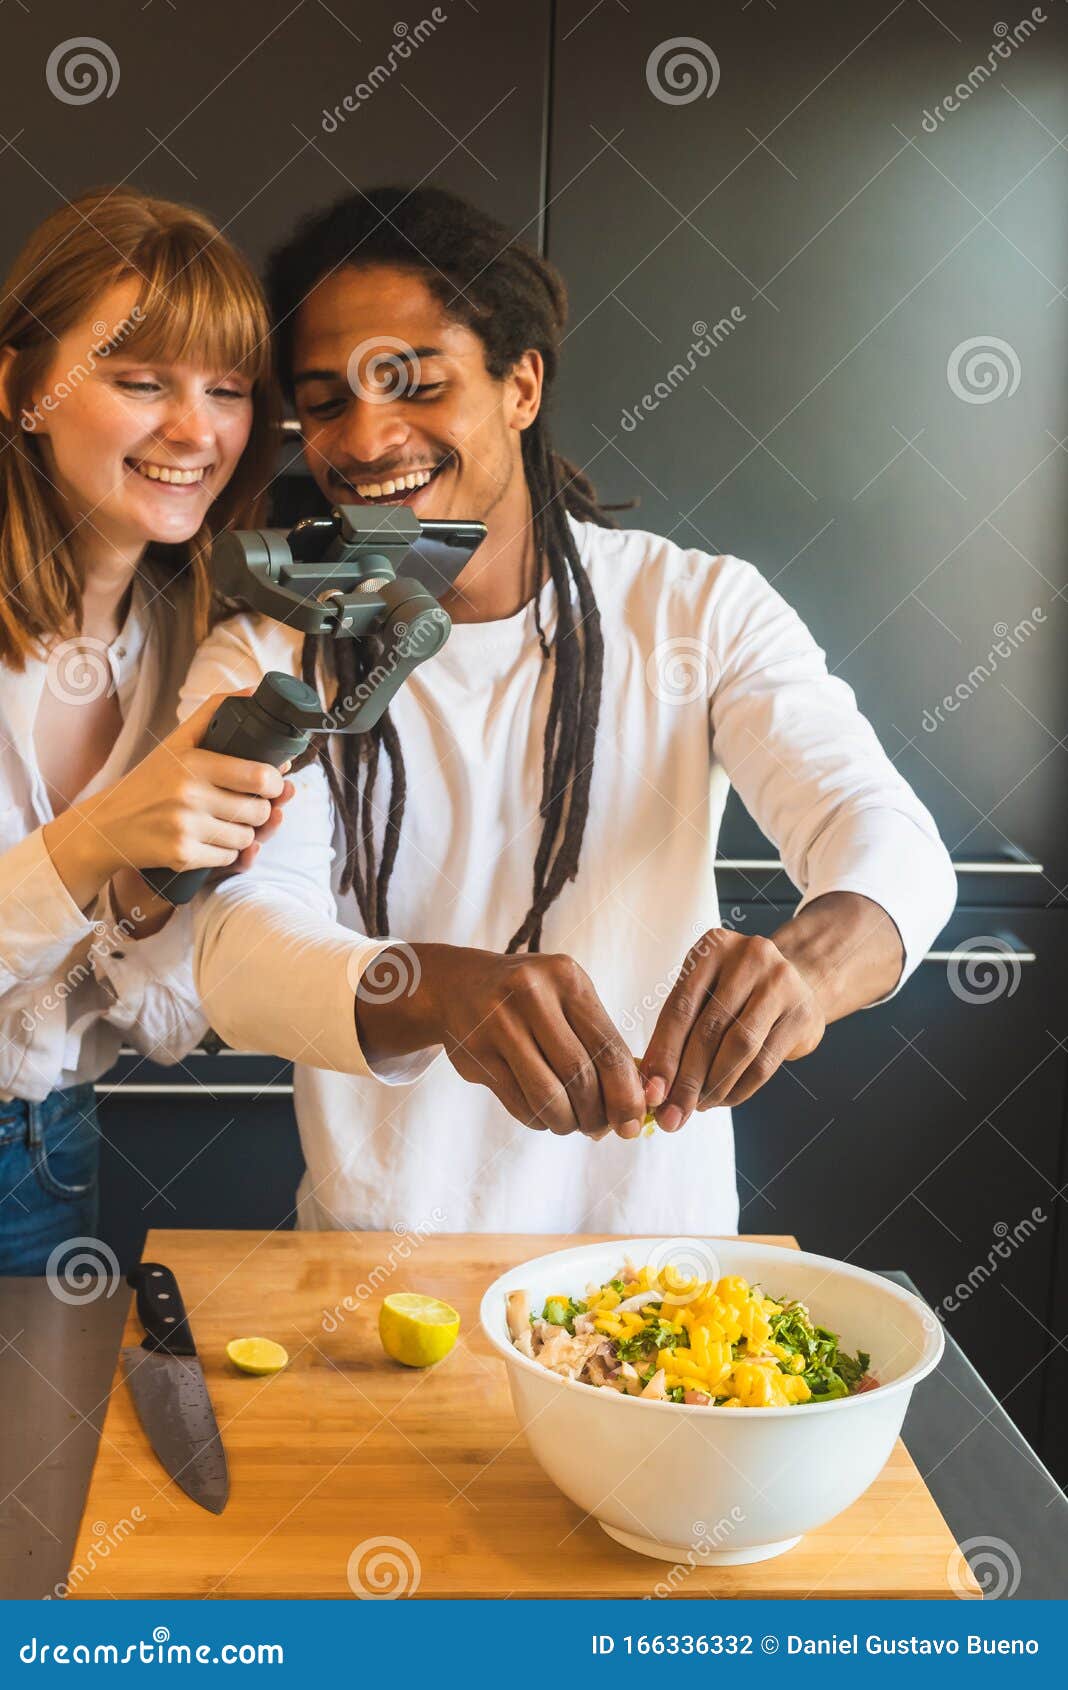 Black Guy Eating Girl Out